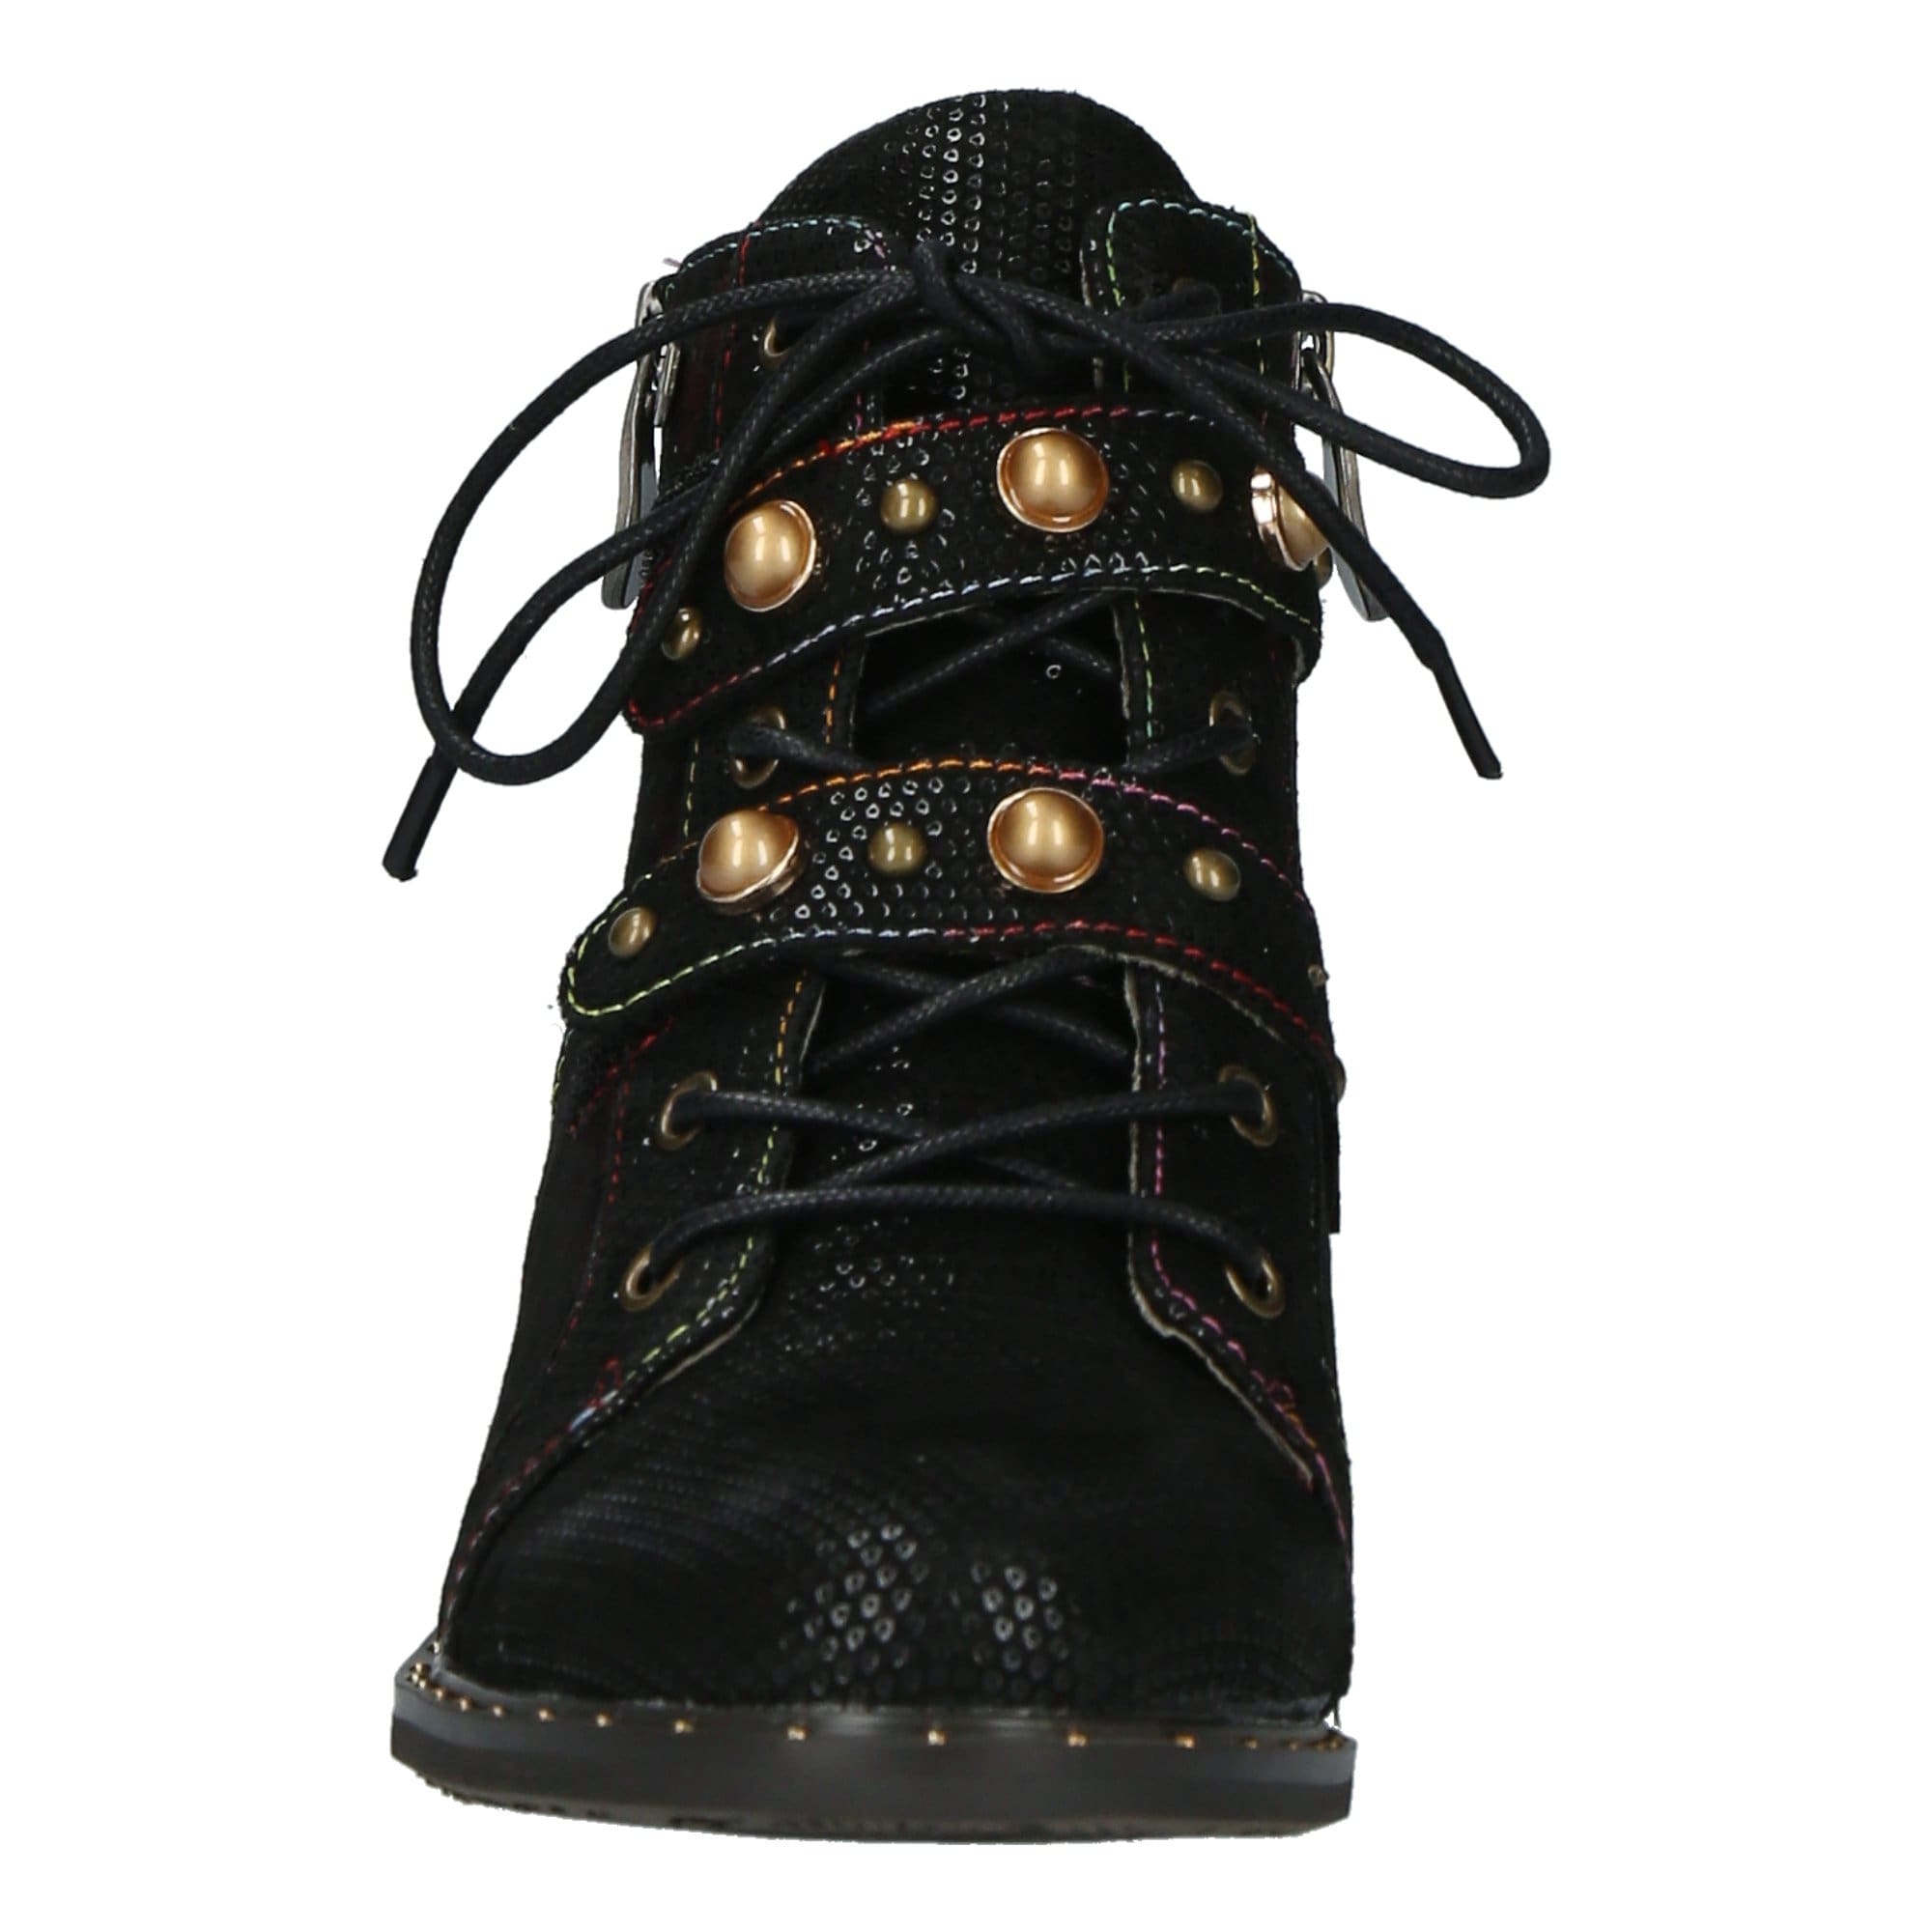 Shoe EMMA 02 - Boots